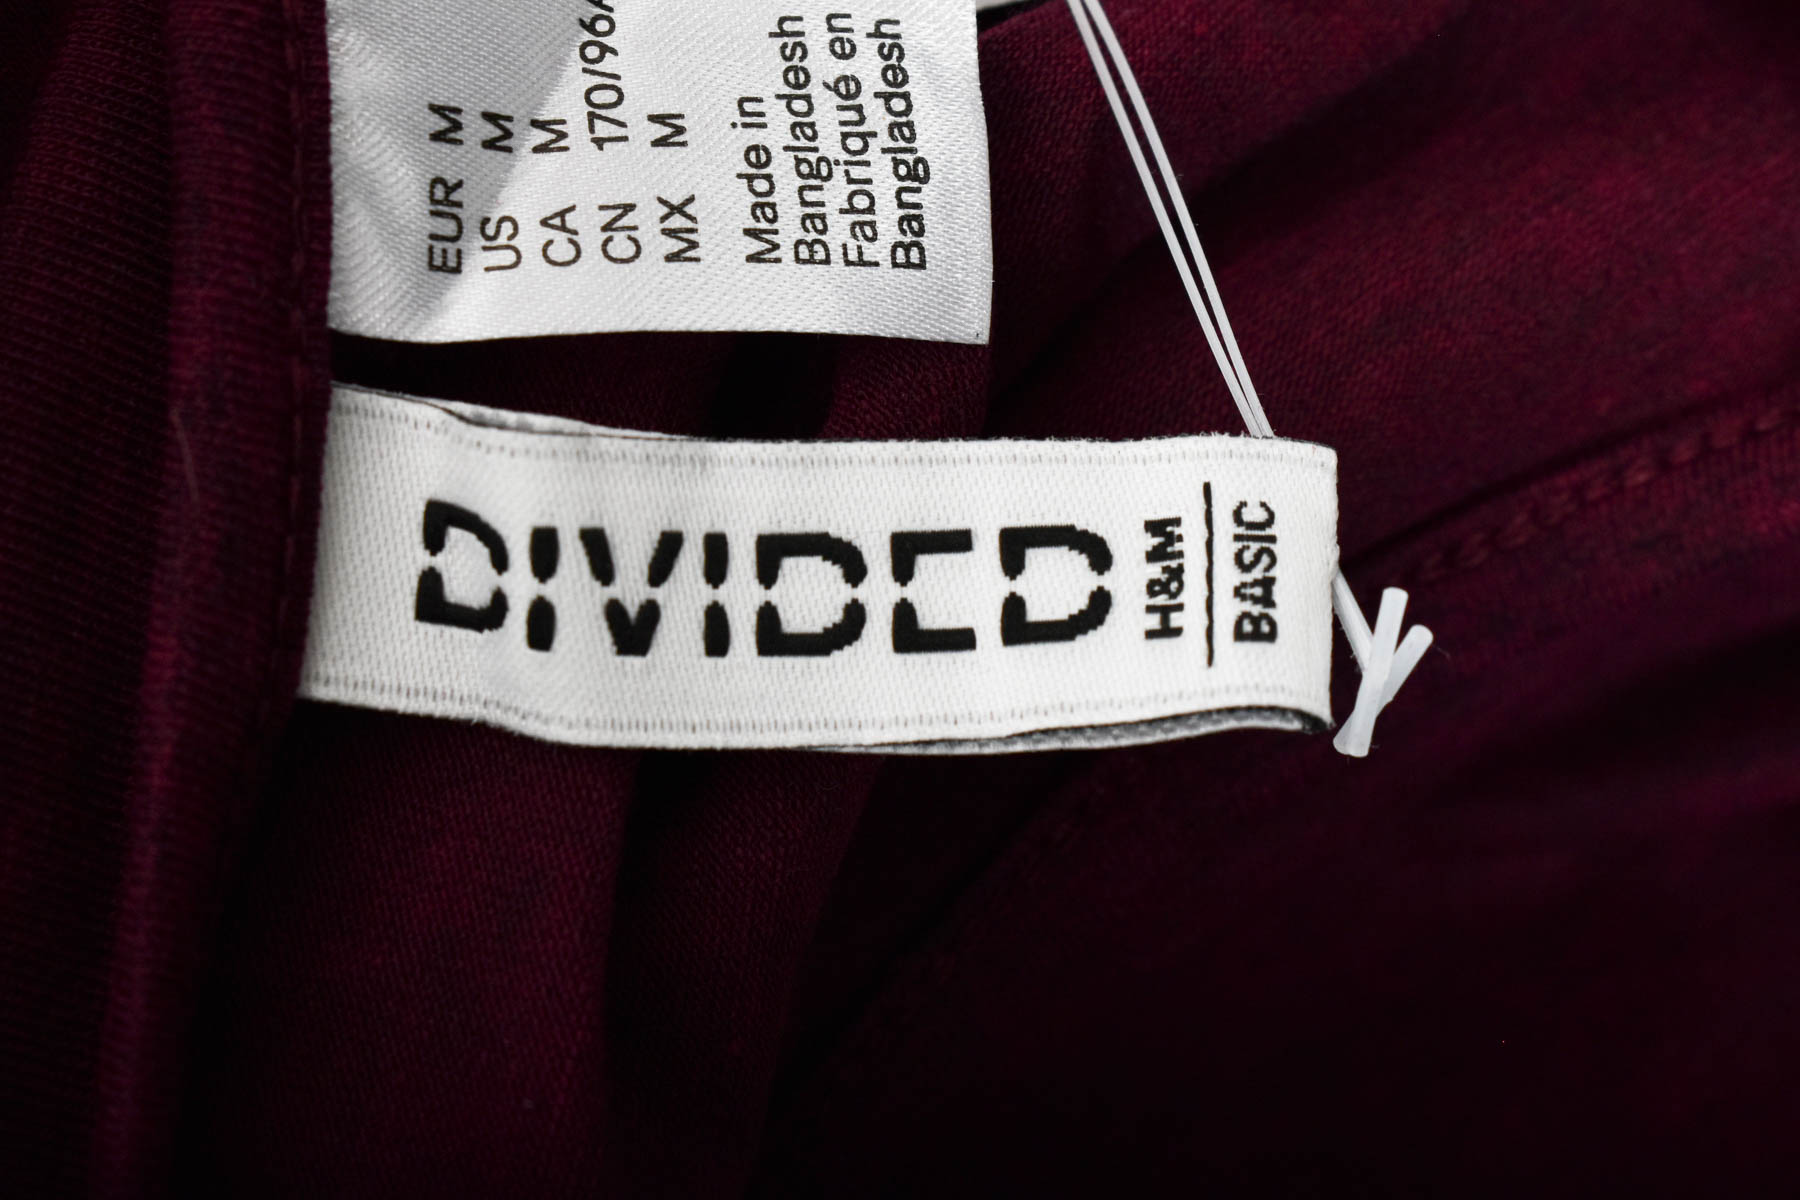 Women's blouse - DIVIDED - 2